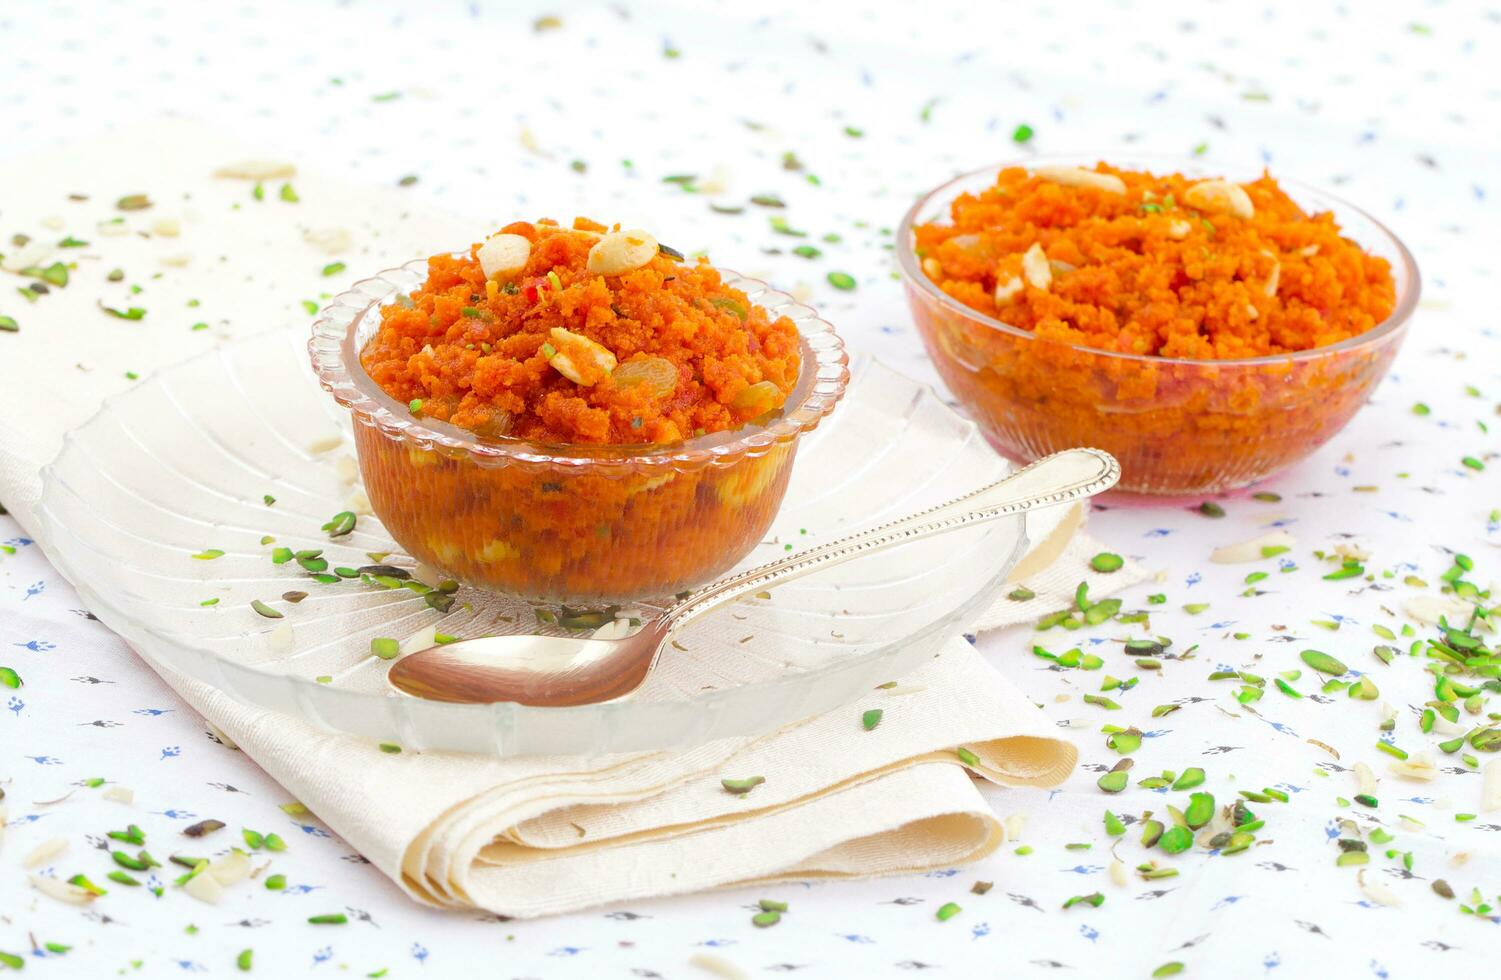 indiano popolare dolce cibo carota halwa foto